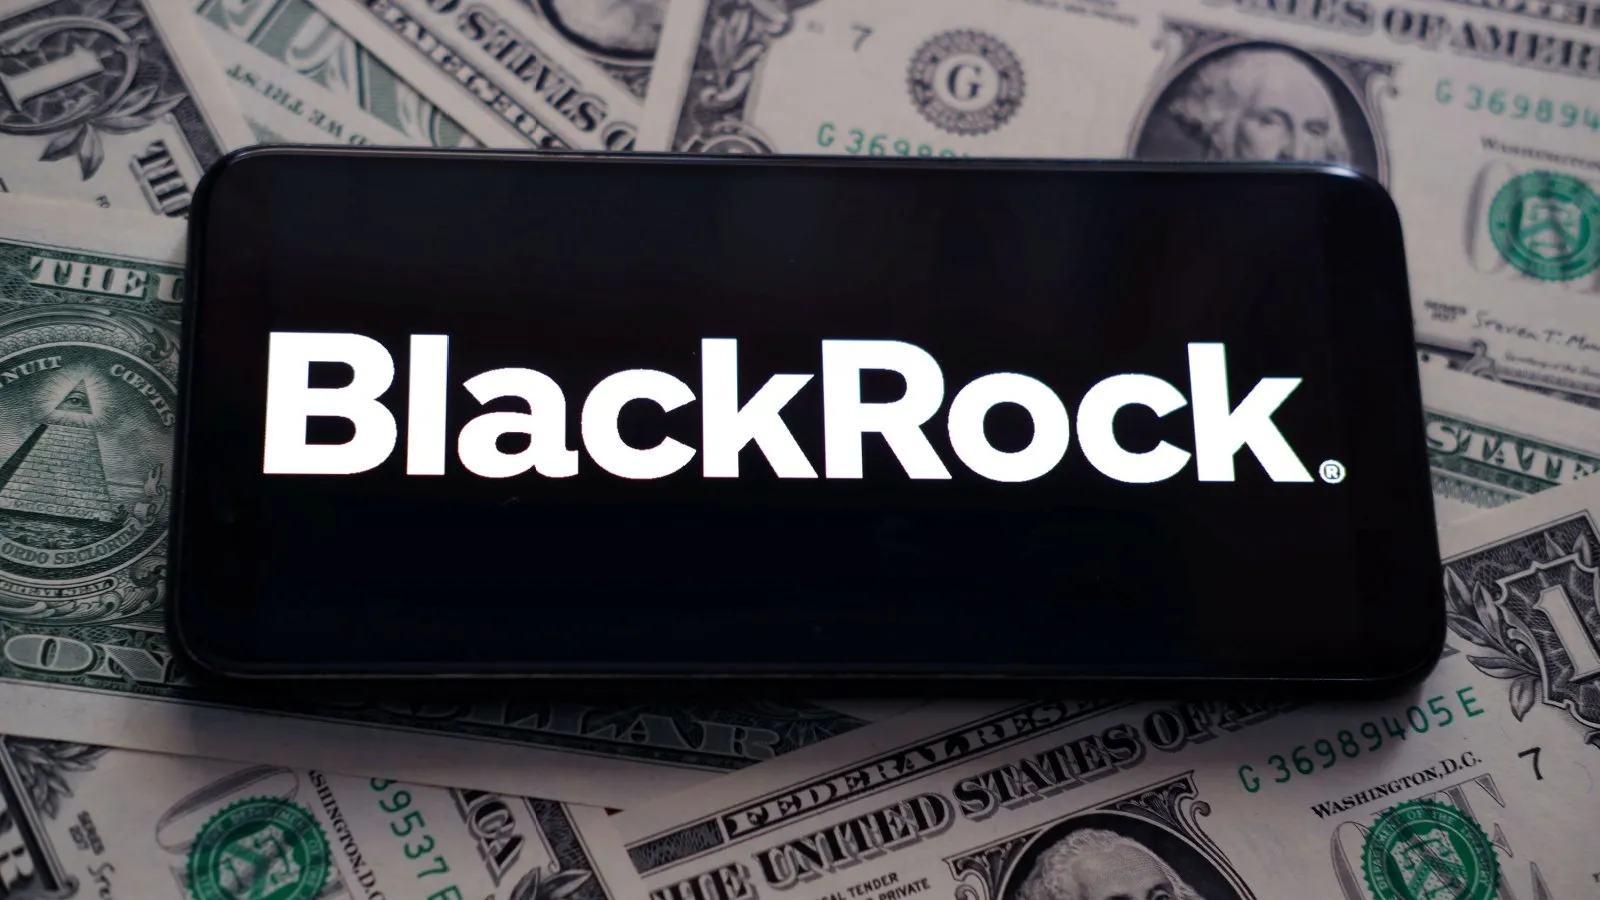 BlackRock is the world's largest asset manager. Source: Shutterstock